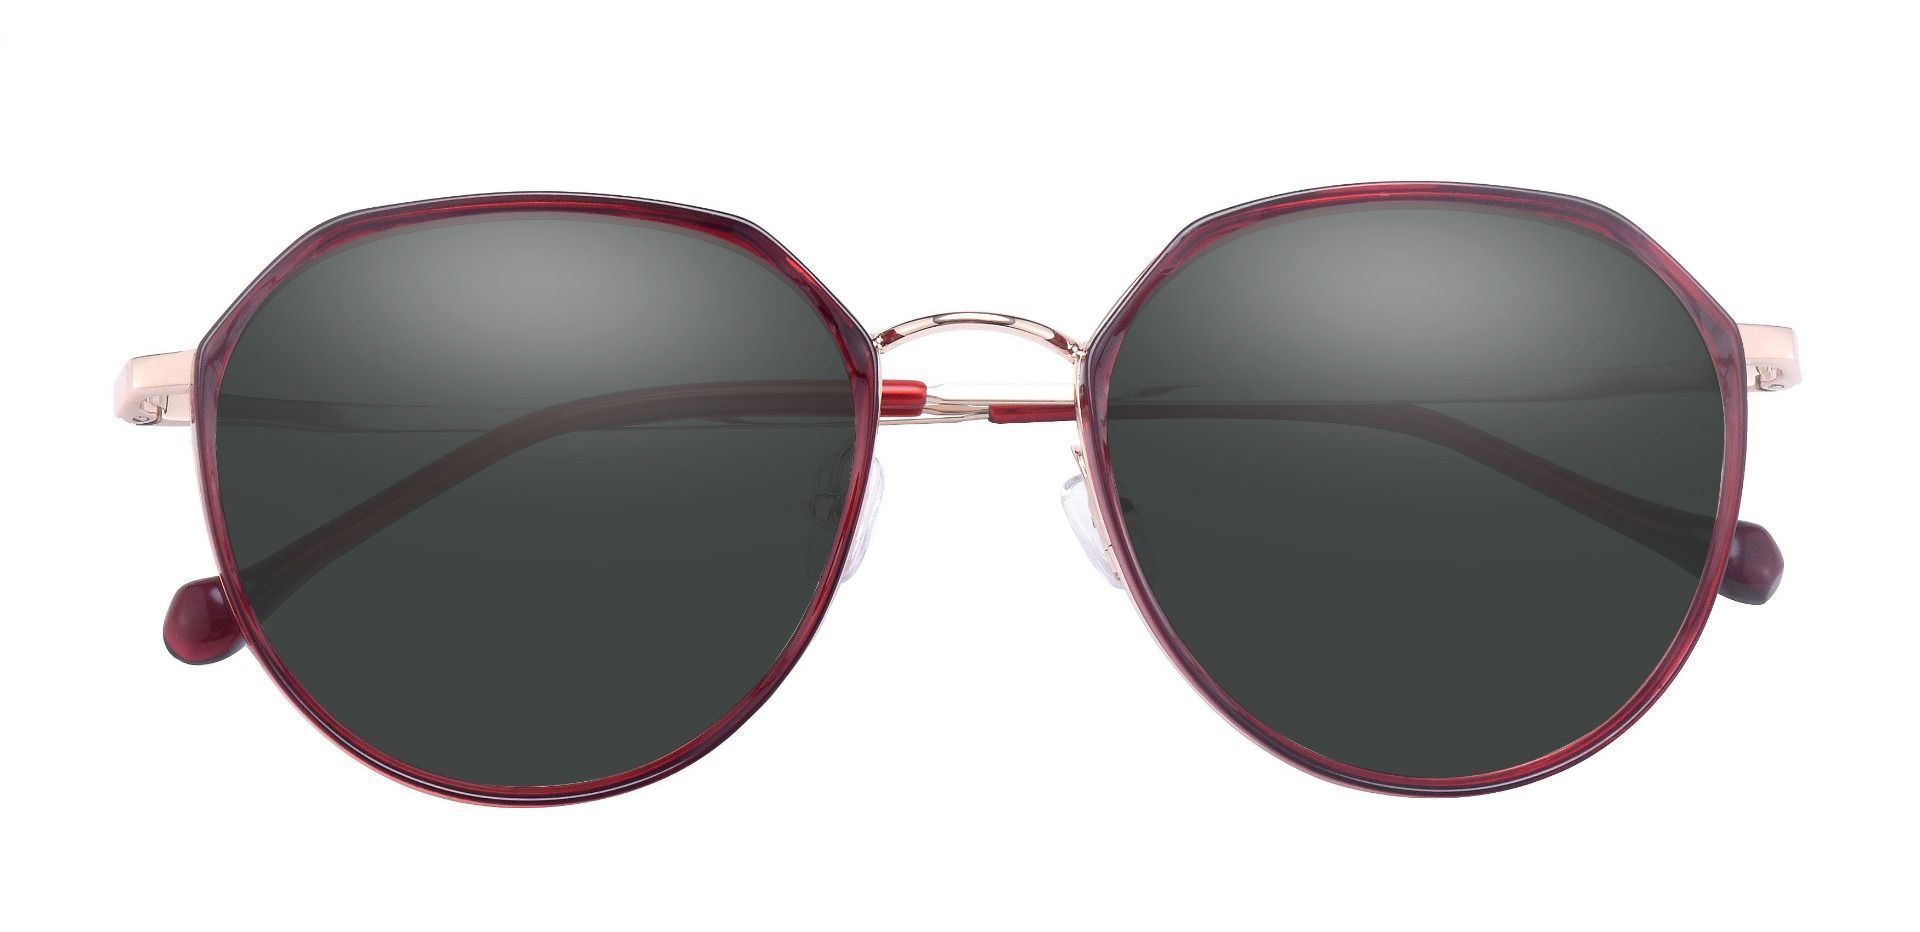 Yorke Geometric Progressive Sunglasses - Red Frame With Gray Lenses